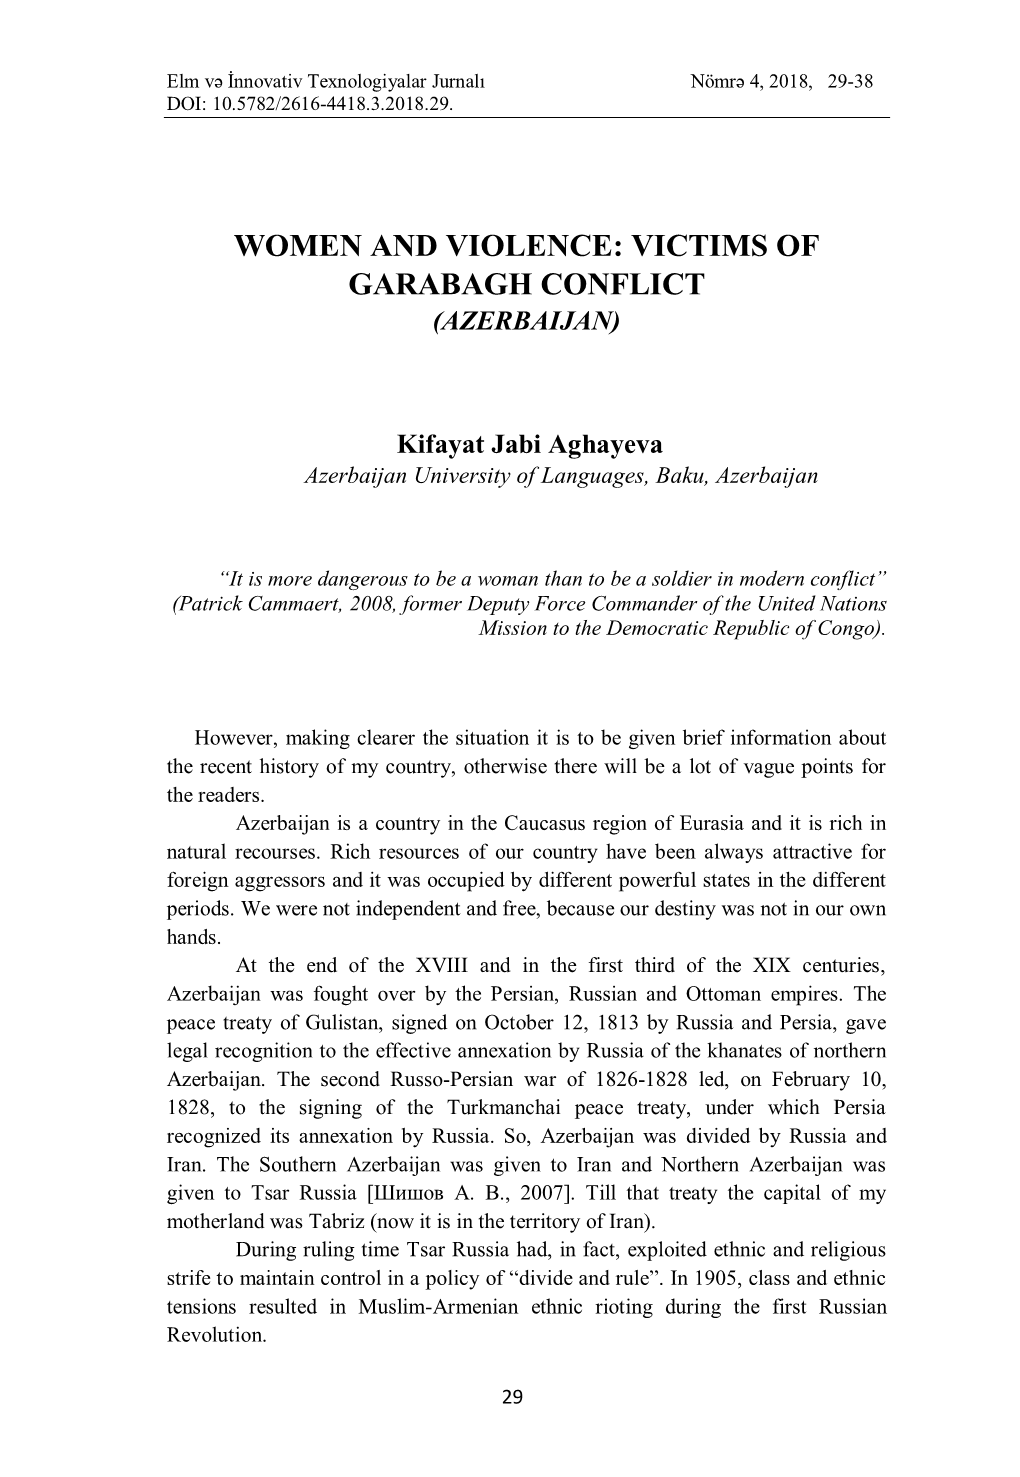 Victims of Garabagh Conflict (Azerbaijan)